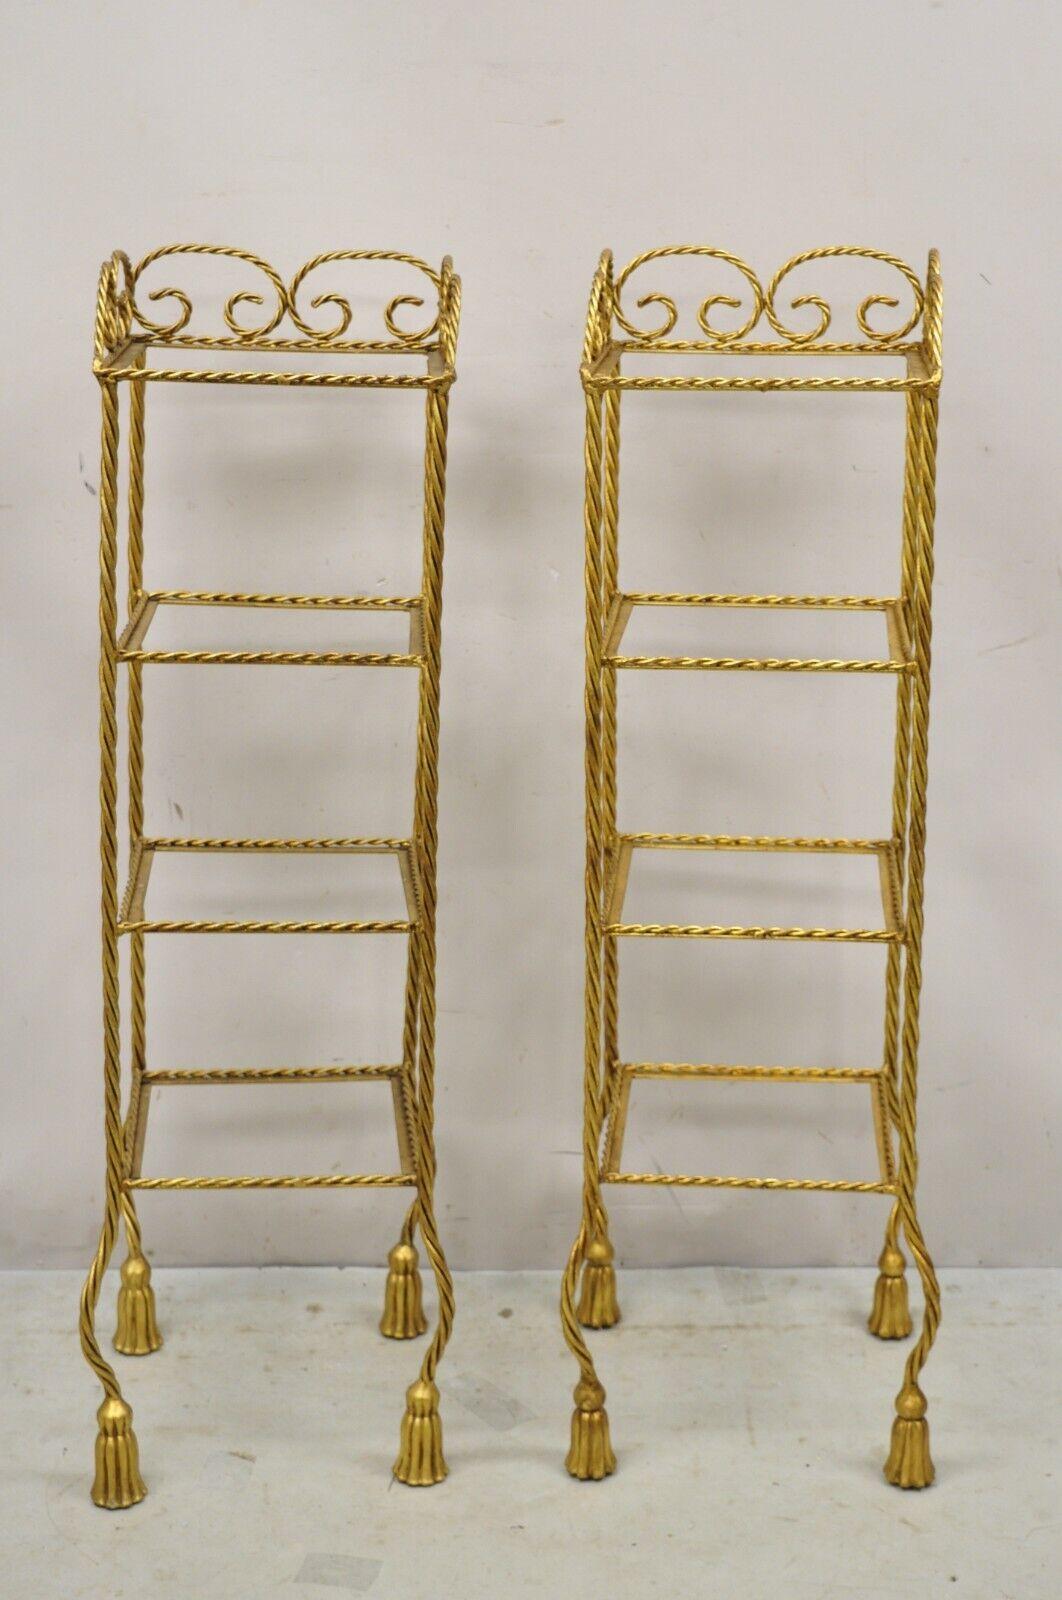 Vintage Italian Hollywood Regency Rope Tassel Gold 4 Tier Iron Display Rack Shelf - Pair. Item features Iron frames, gold gilt finish, tassel form feet, 4 tiers (no glass), very nice vintage pair, quality Italian craftsmanship, nice smaller size.